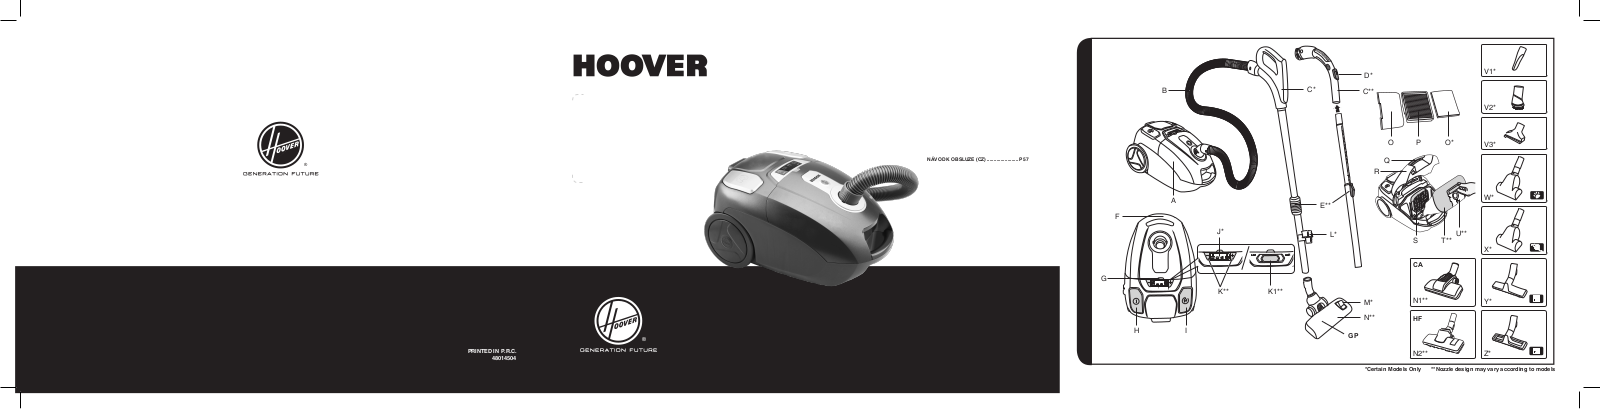 Hoover AC69011 User Manual